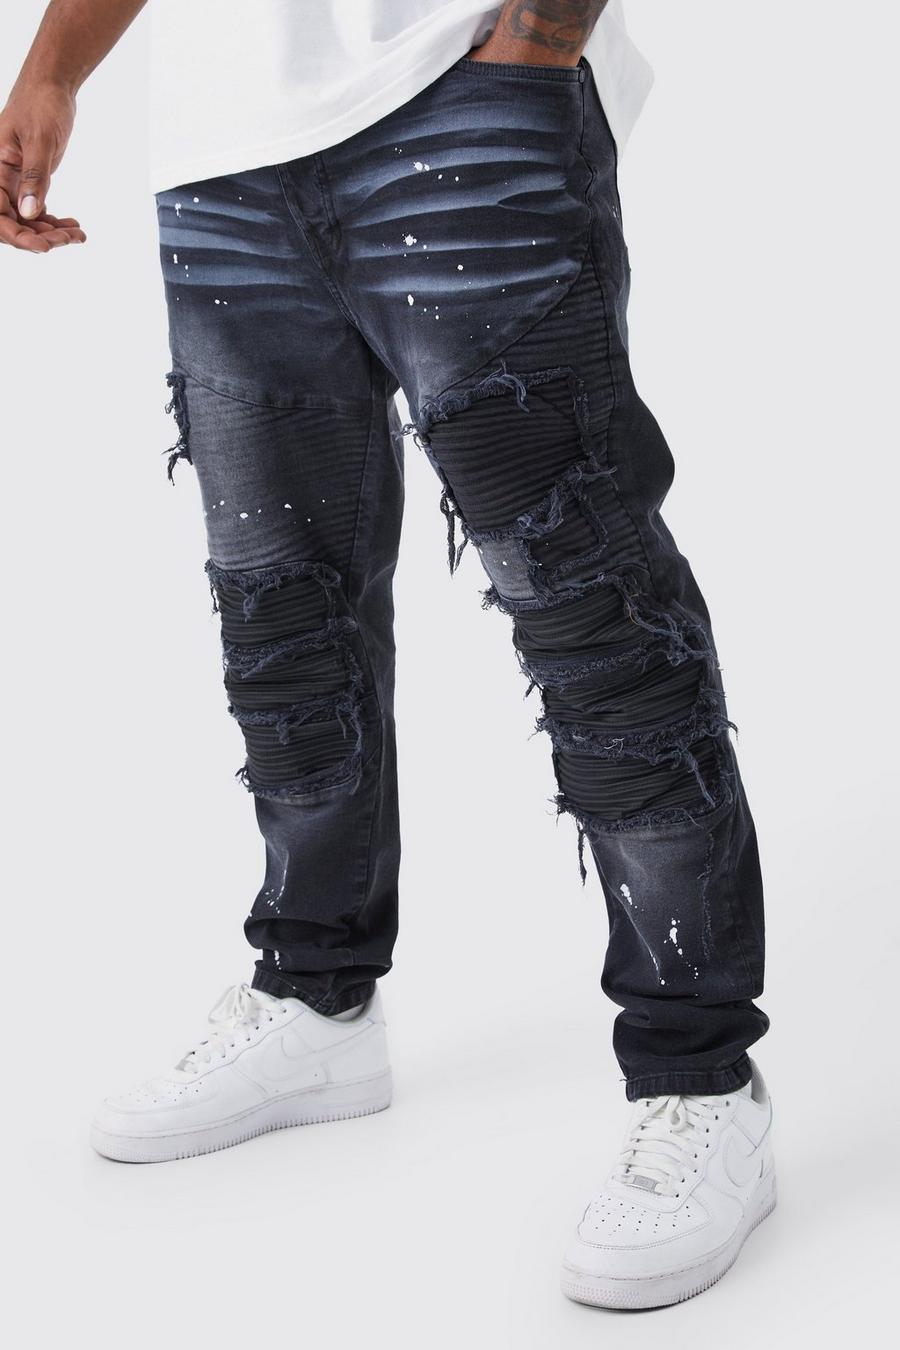 Jeans da Biker Plus Size Skinny Fit Stretch in PU con strappi & rattoppi, Washed black